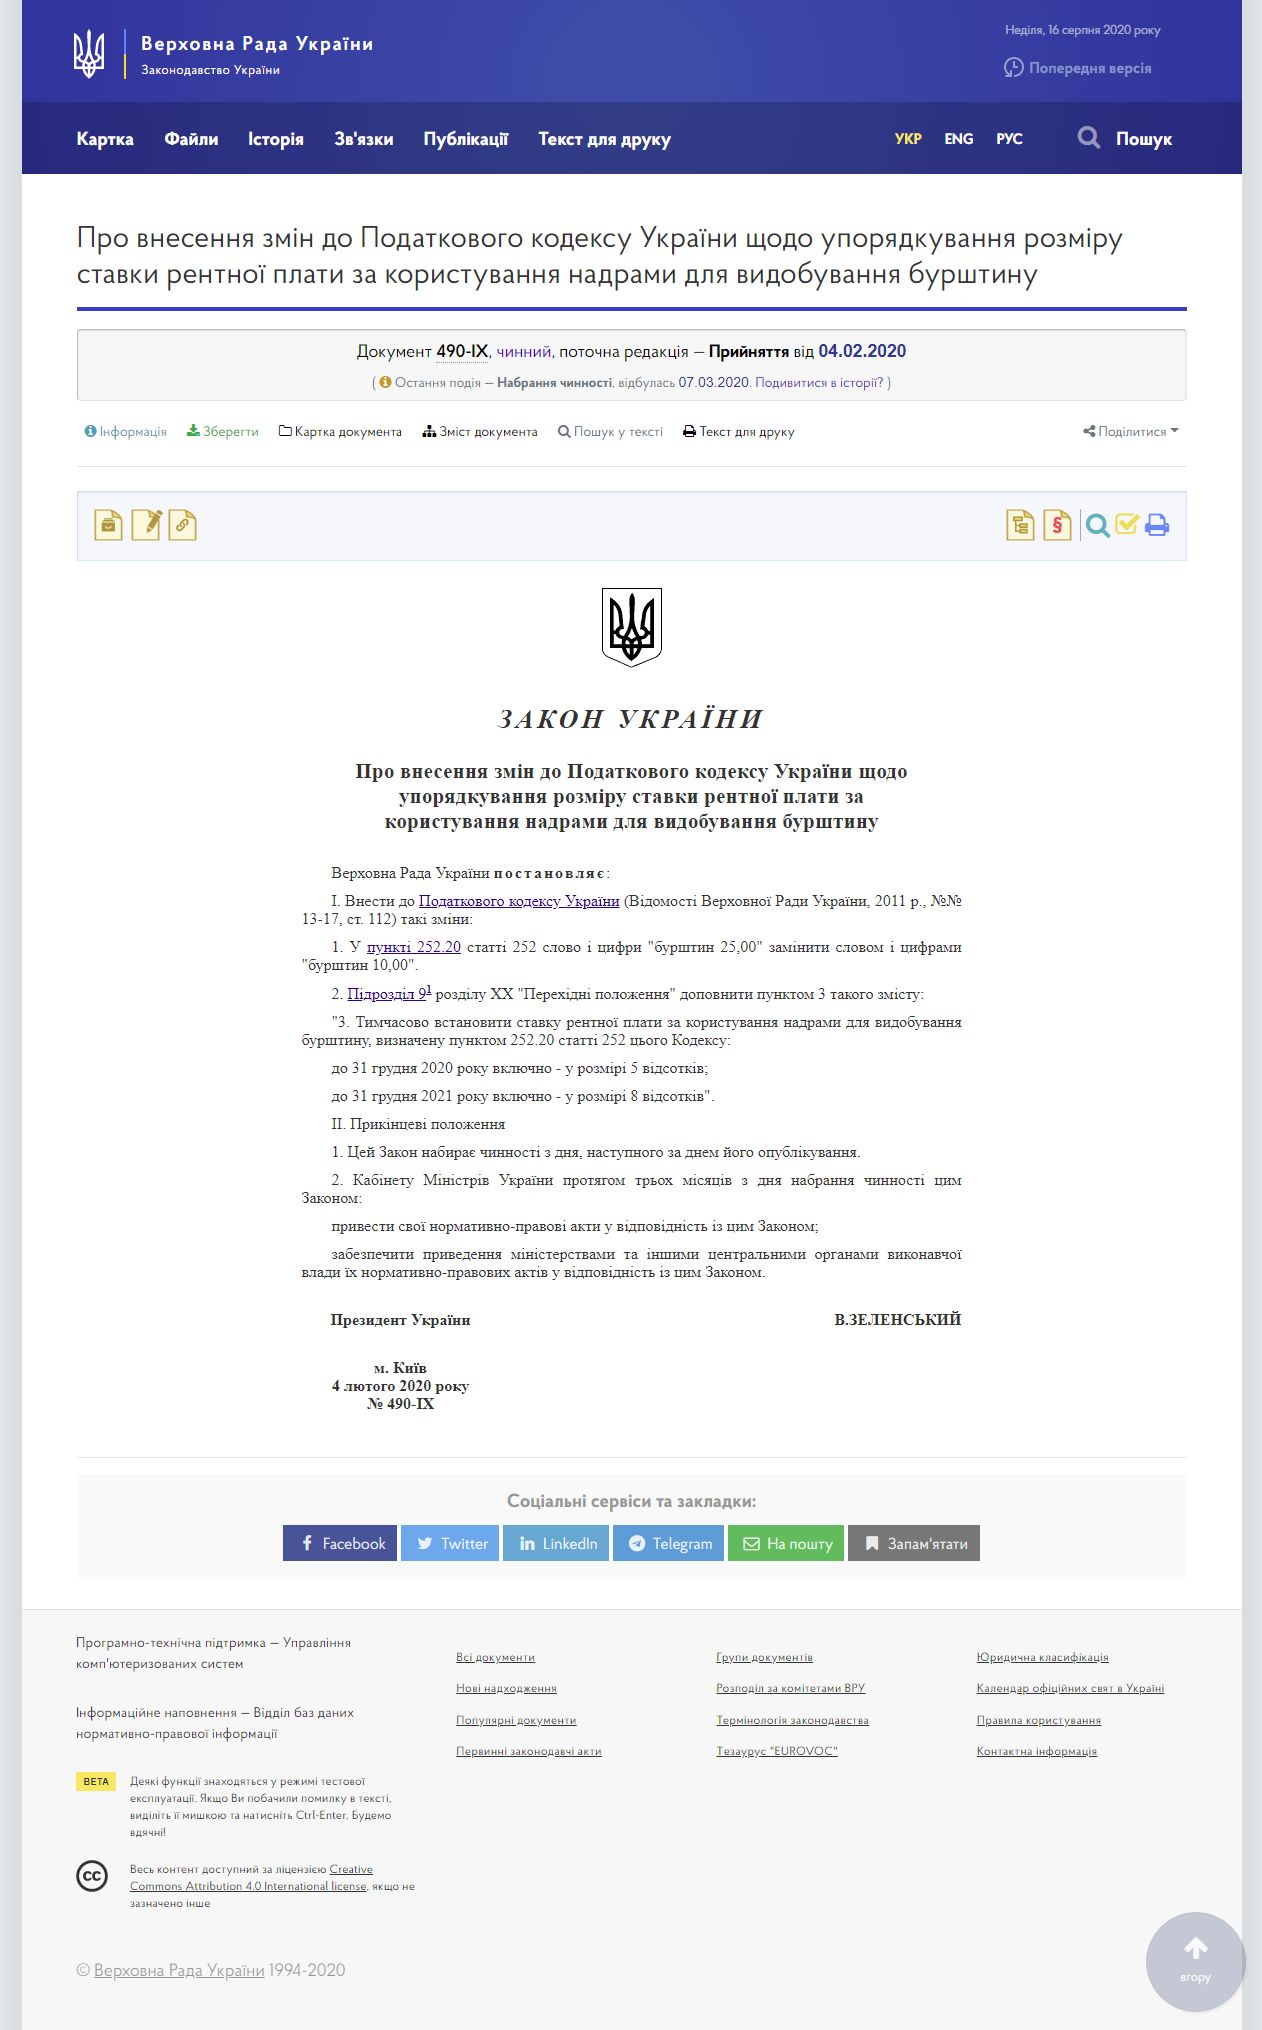 https://zakon.rada.gov.ua/laws/show/490-20#n2